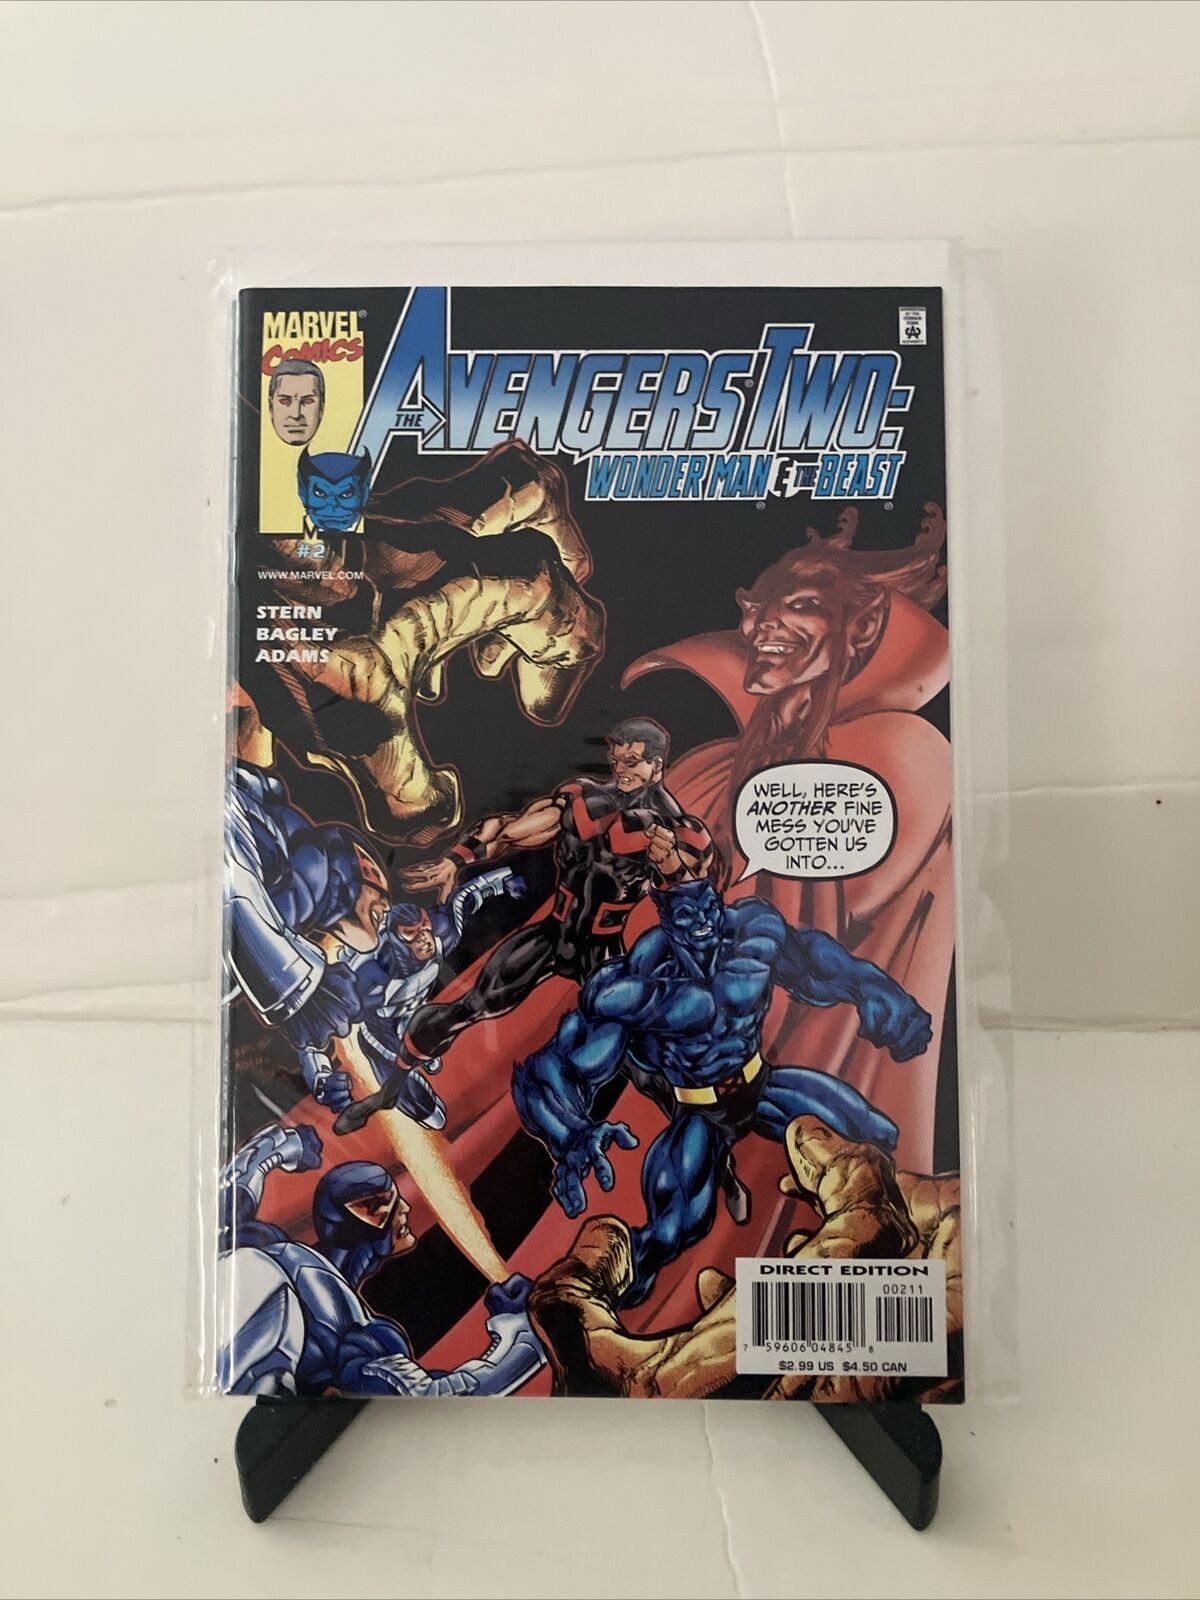 Marvel AVENGERS TWO WONDER MAN AND THE BEAST #2 (Jun 2000) Mark Bagley